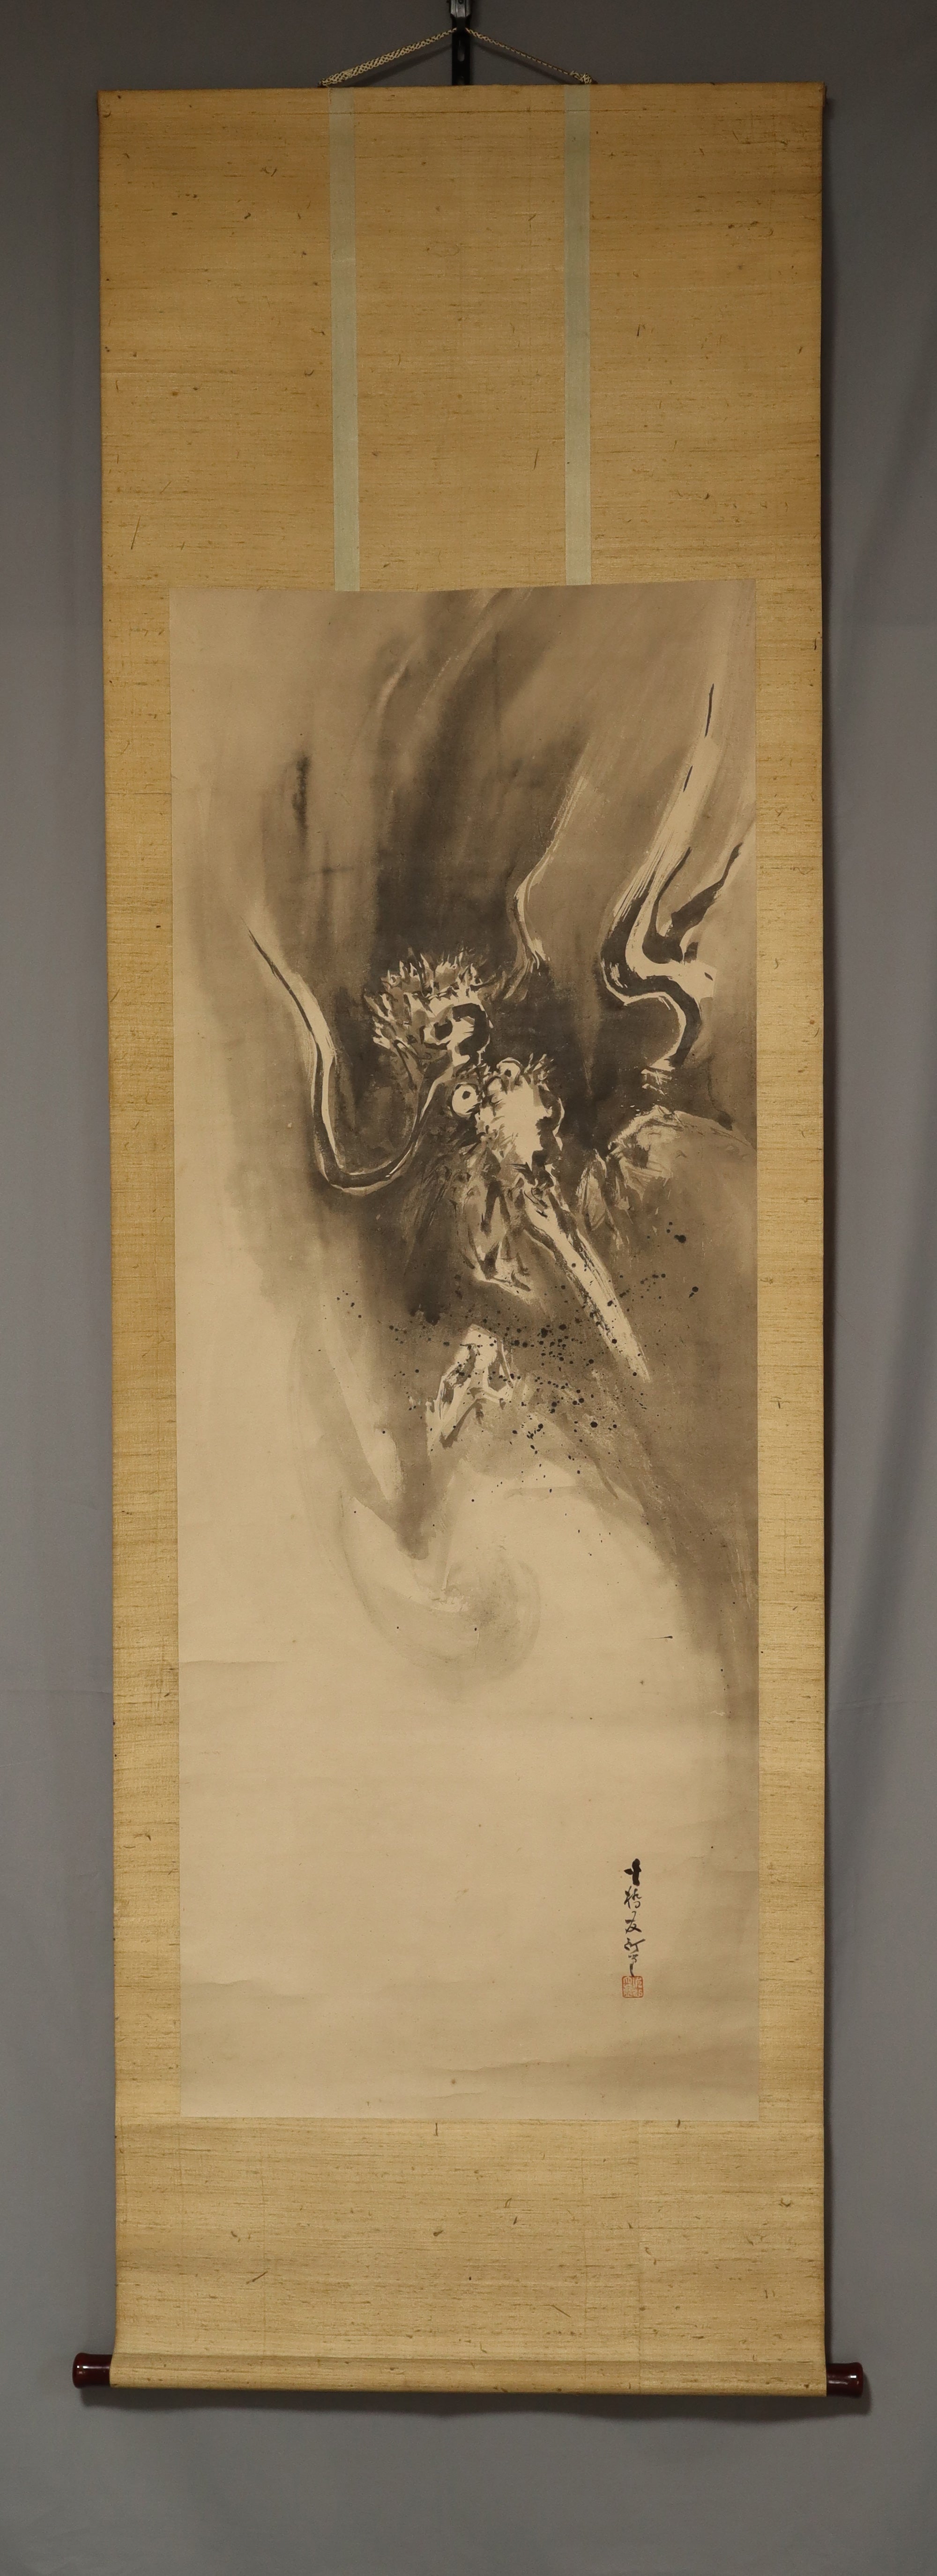 Ishida Yutei（1756-1815）“崛起的龙”中江户时代